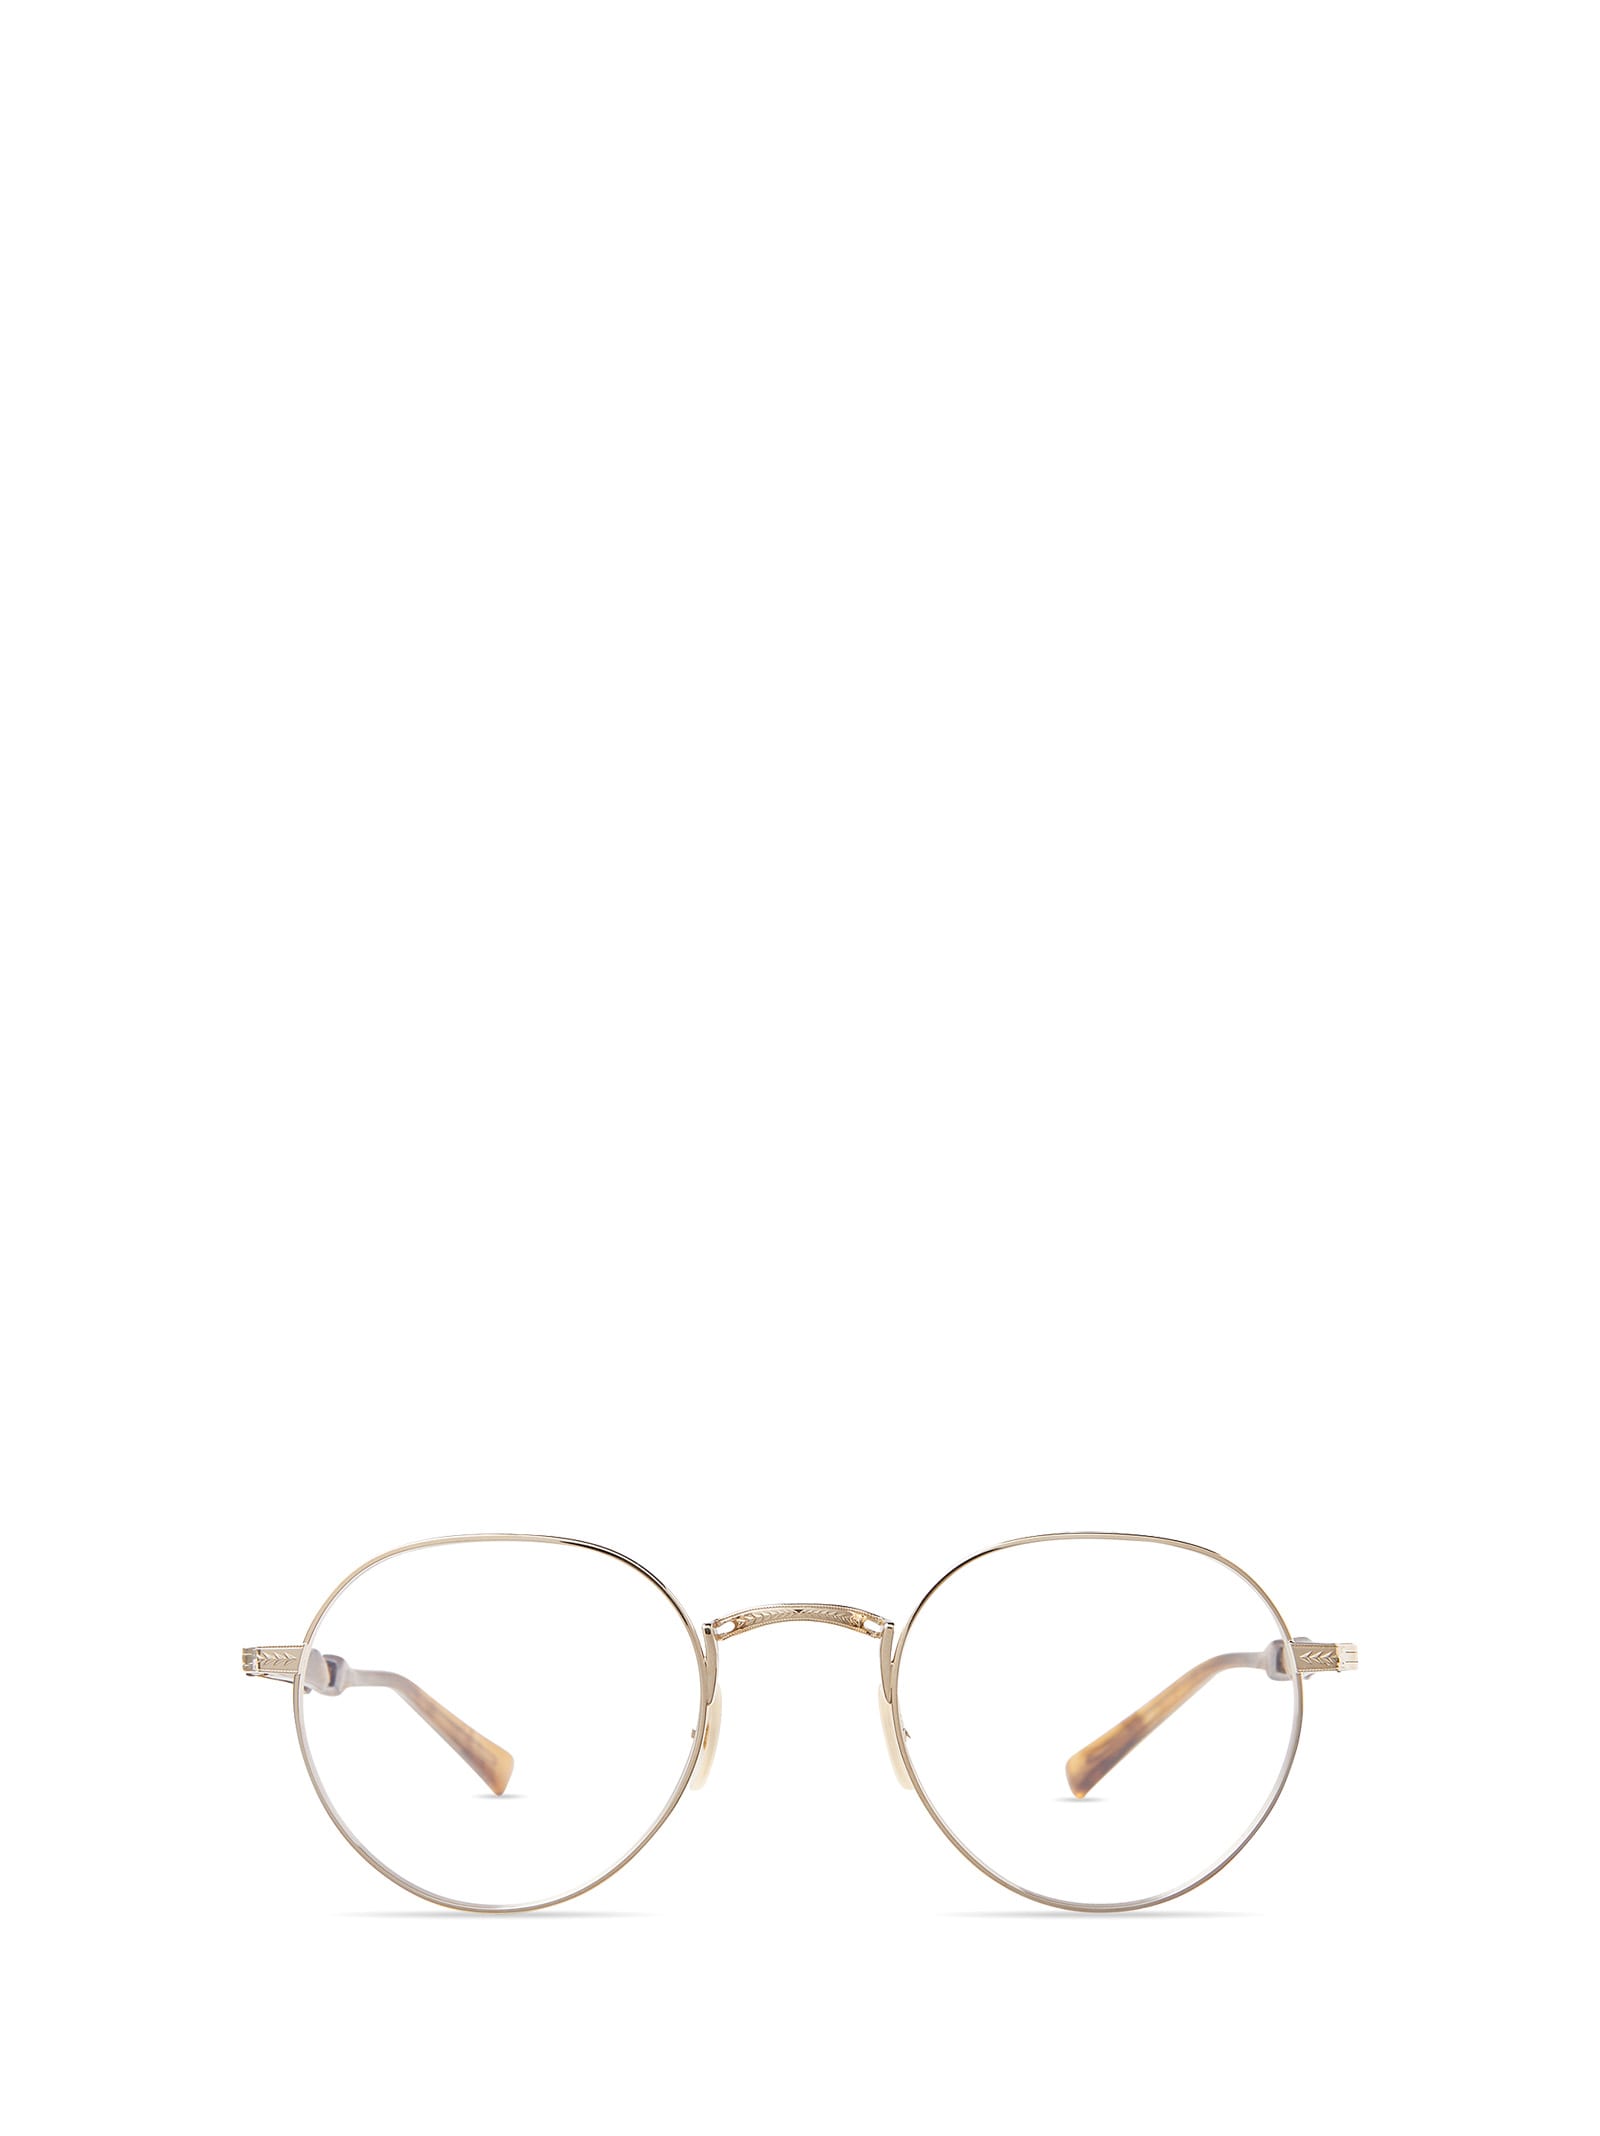 Hachi Ii C 12k White Gold-marbled Rye Glasses